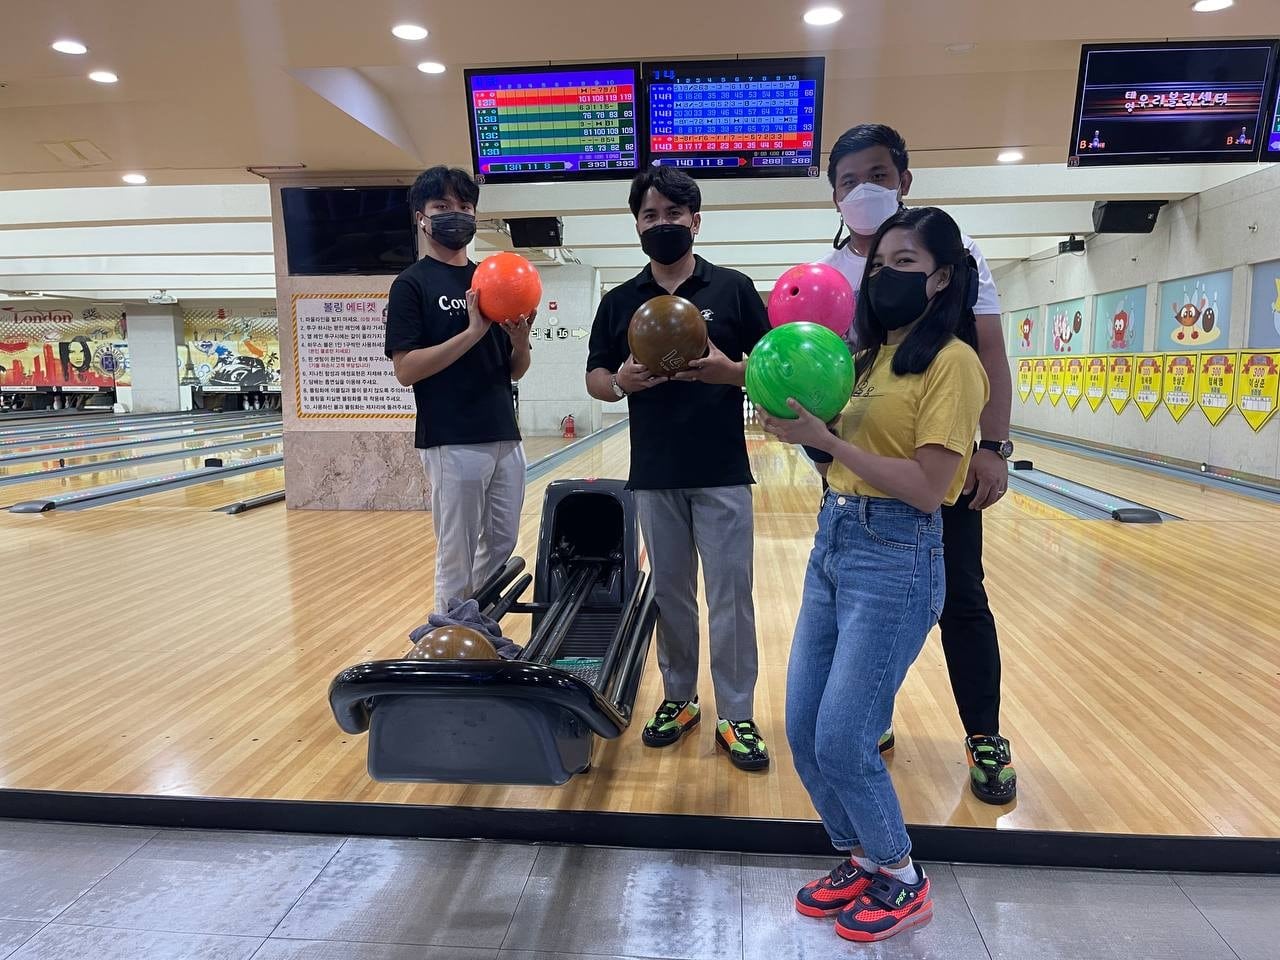 Brethren from Uijeongbu, SK bond in friendly bowling tourney